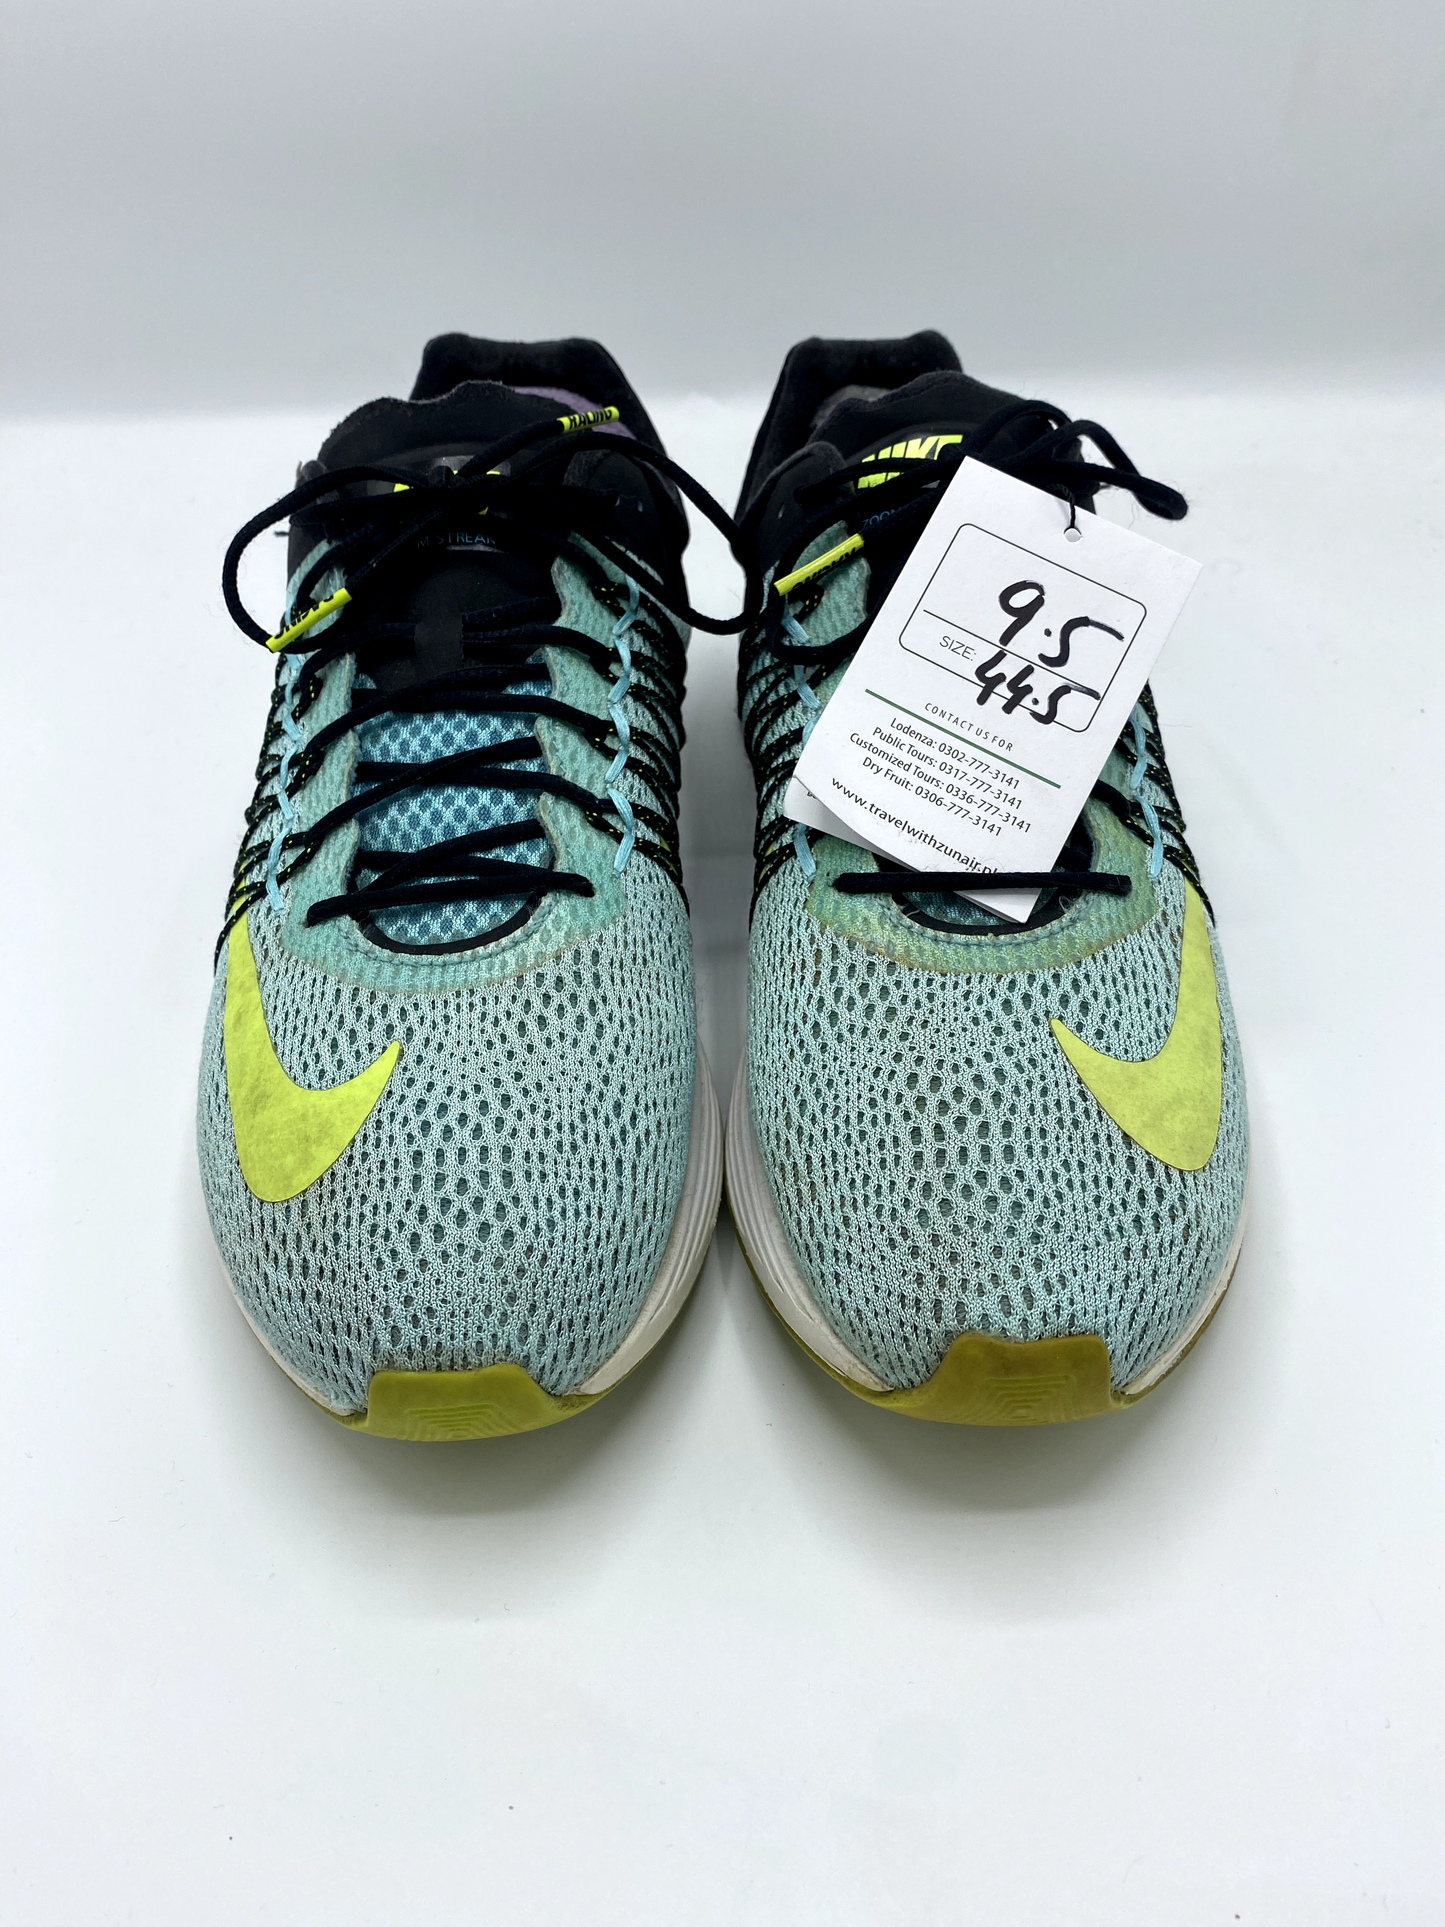 Nike Zoom Streak 5 CP Running Shoes